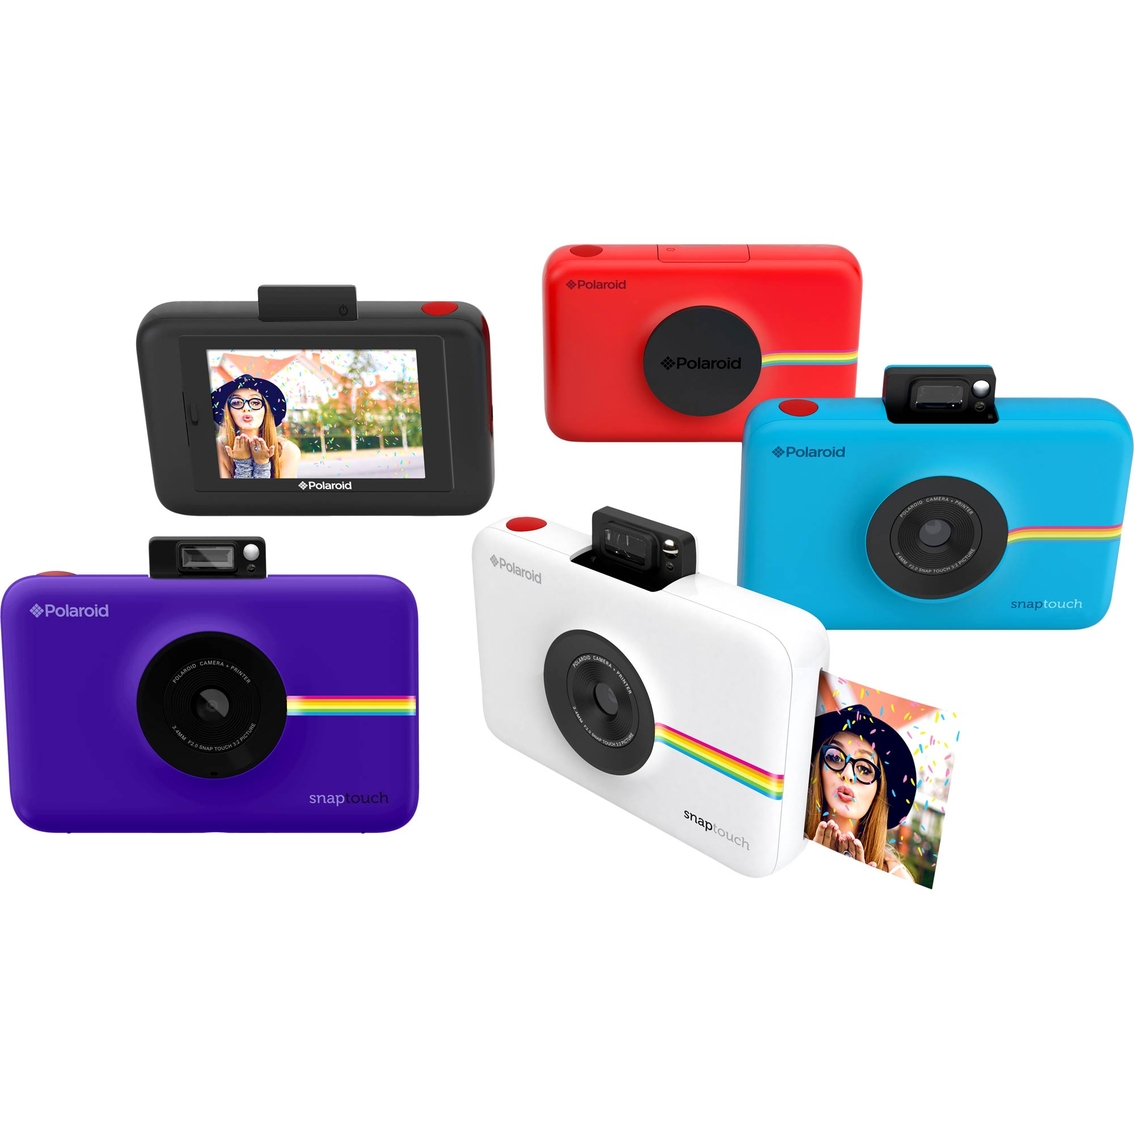 Polaroid Snap Touch Digital Camera - Image 2 of 4